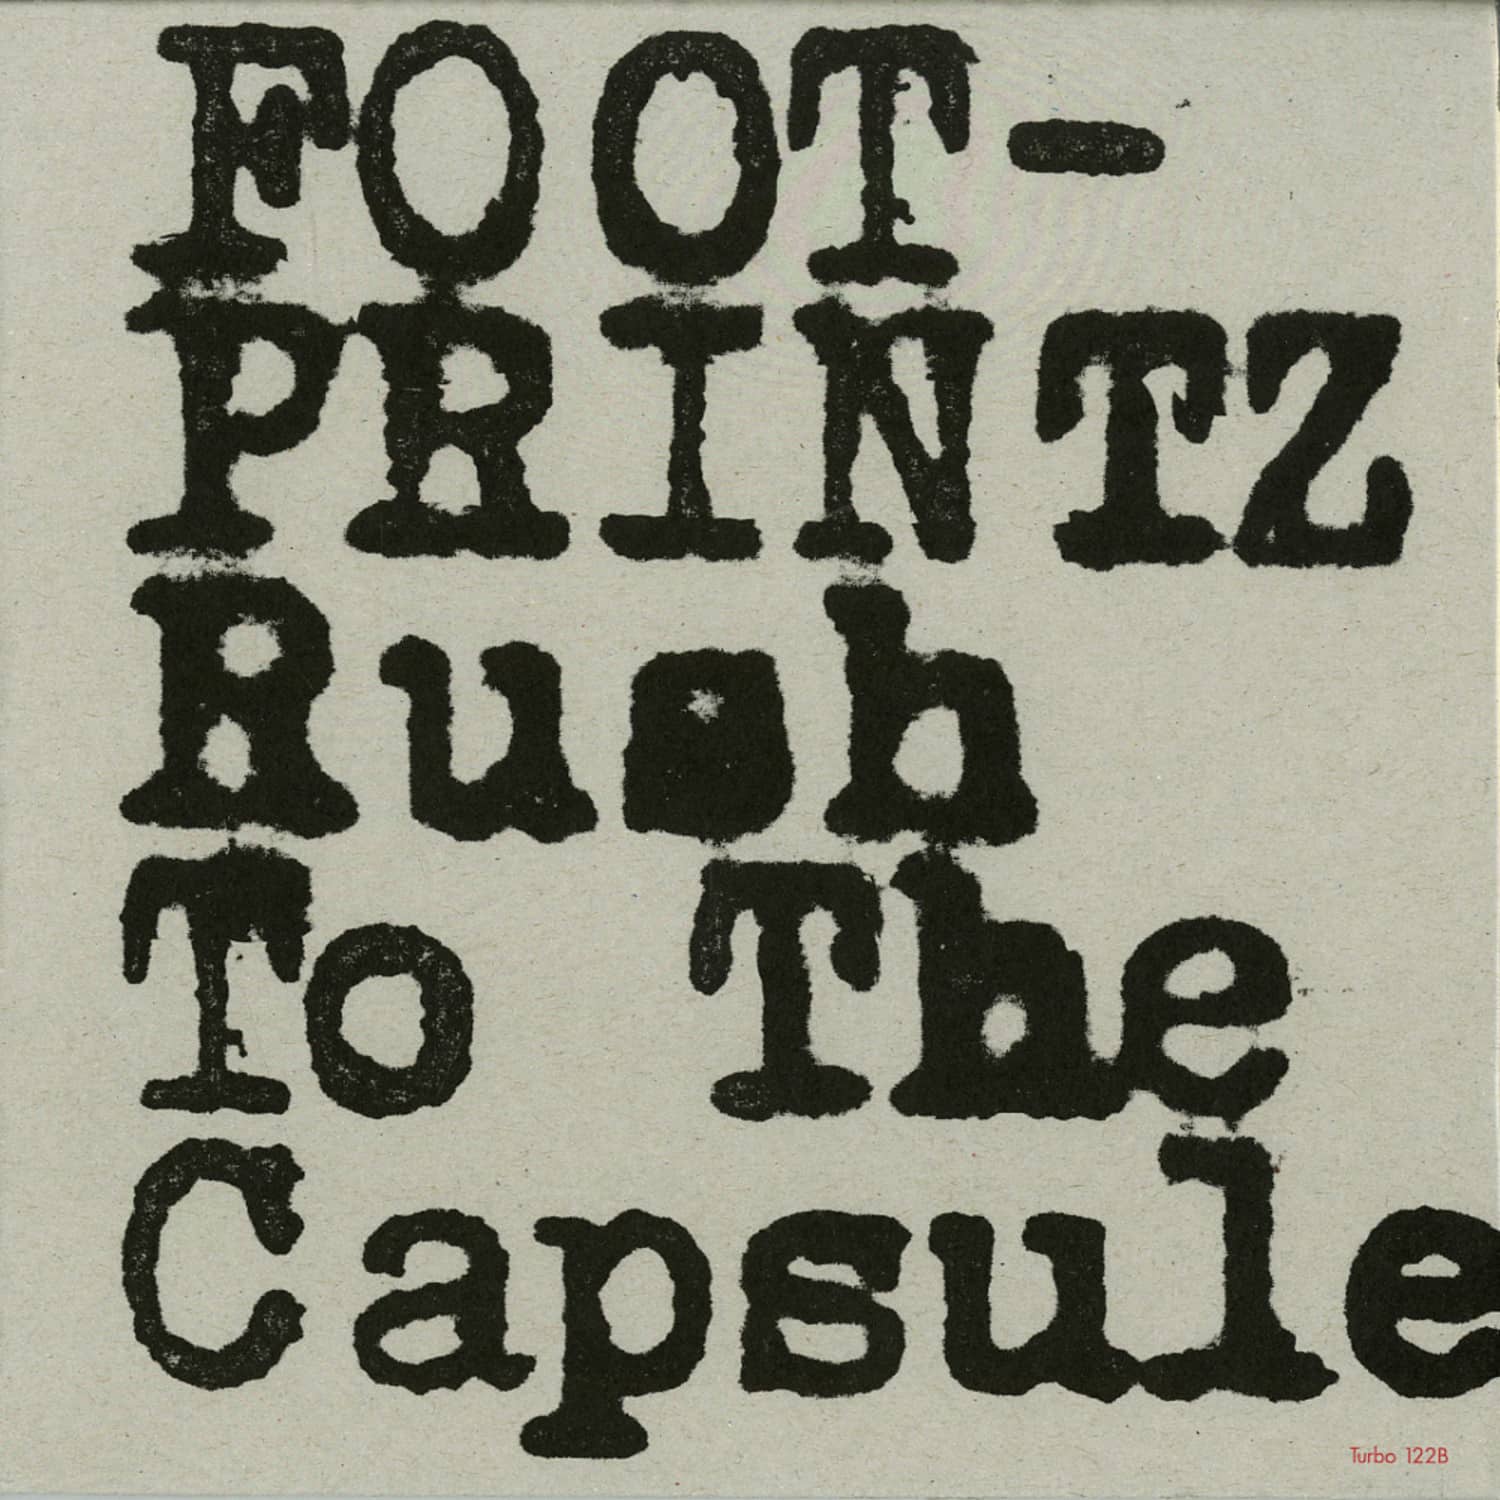 Footprintz - RUSH TO THE CAPSULE 